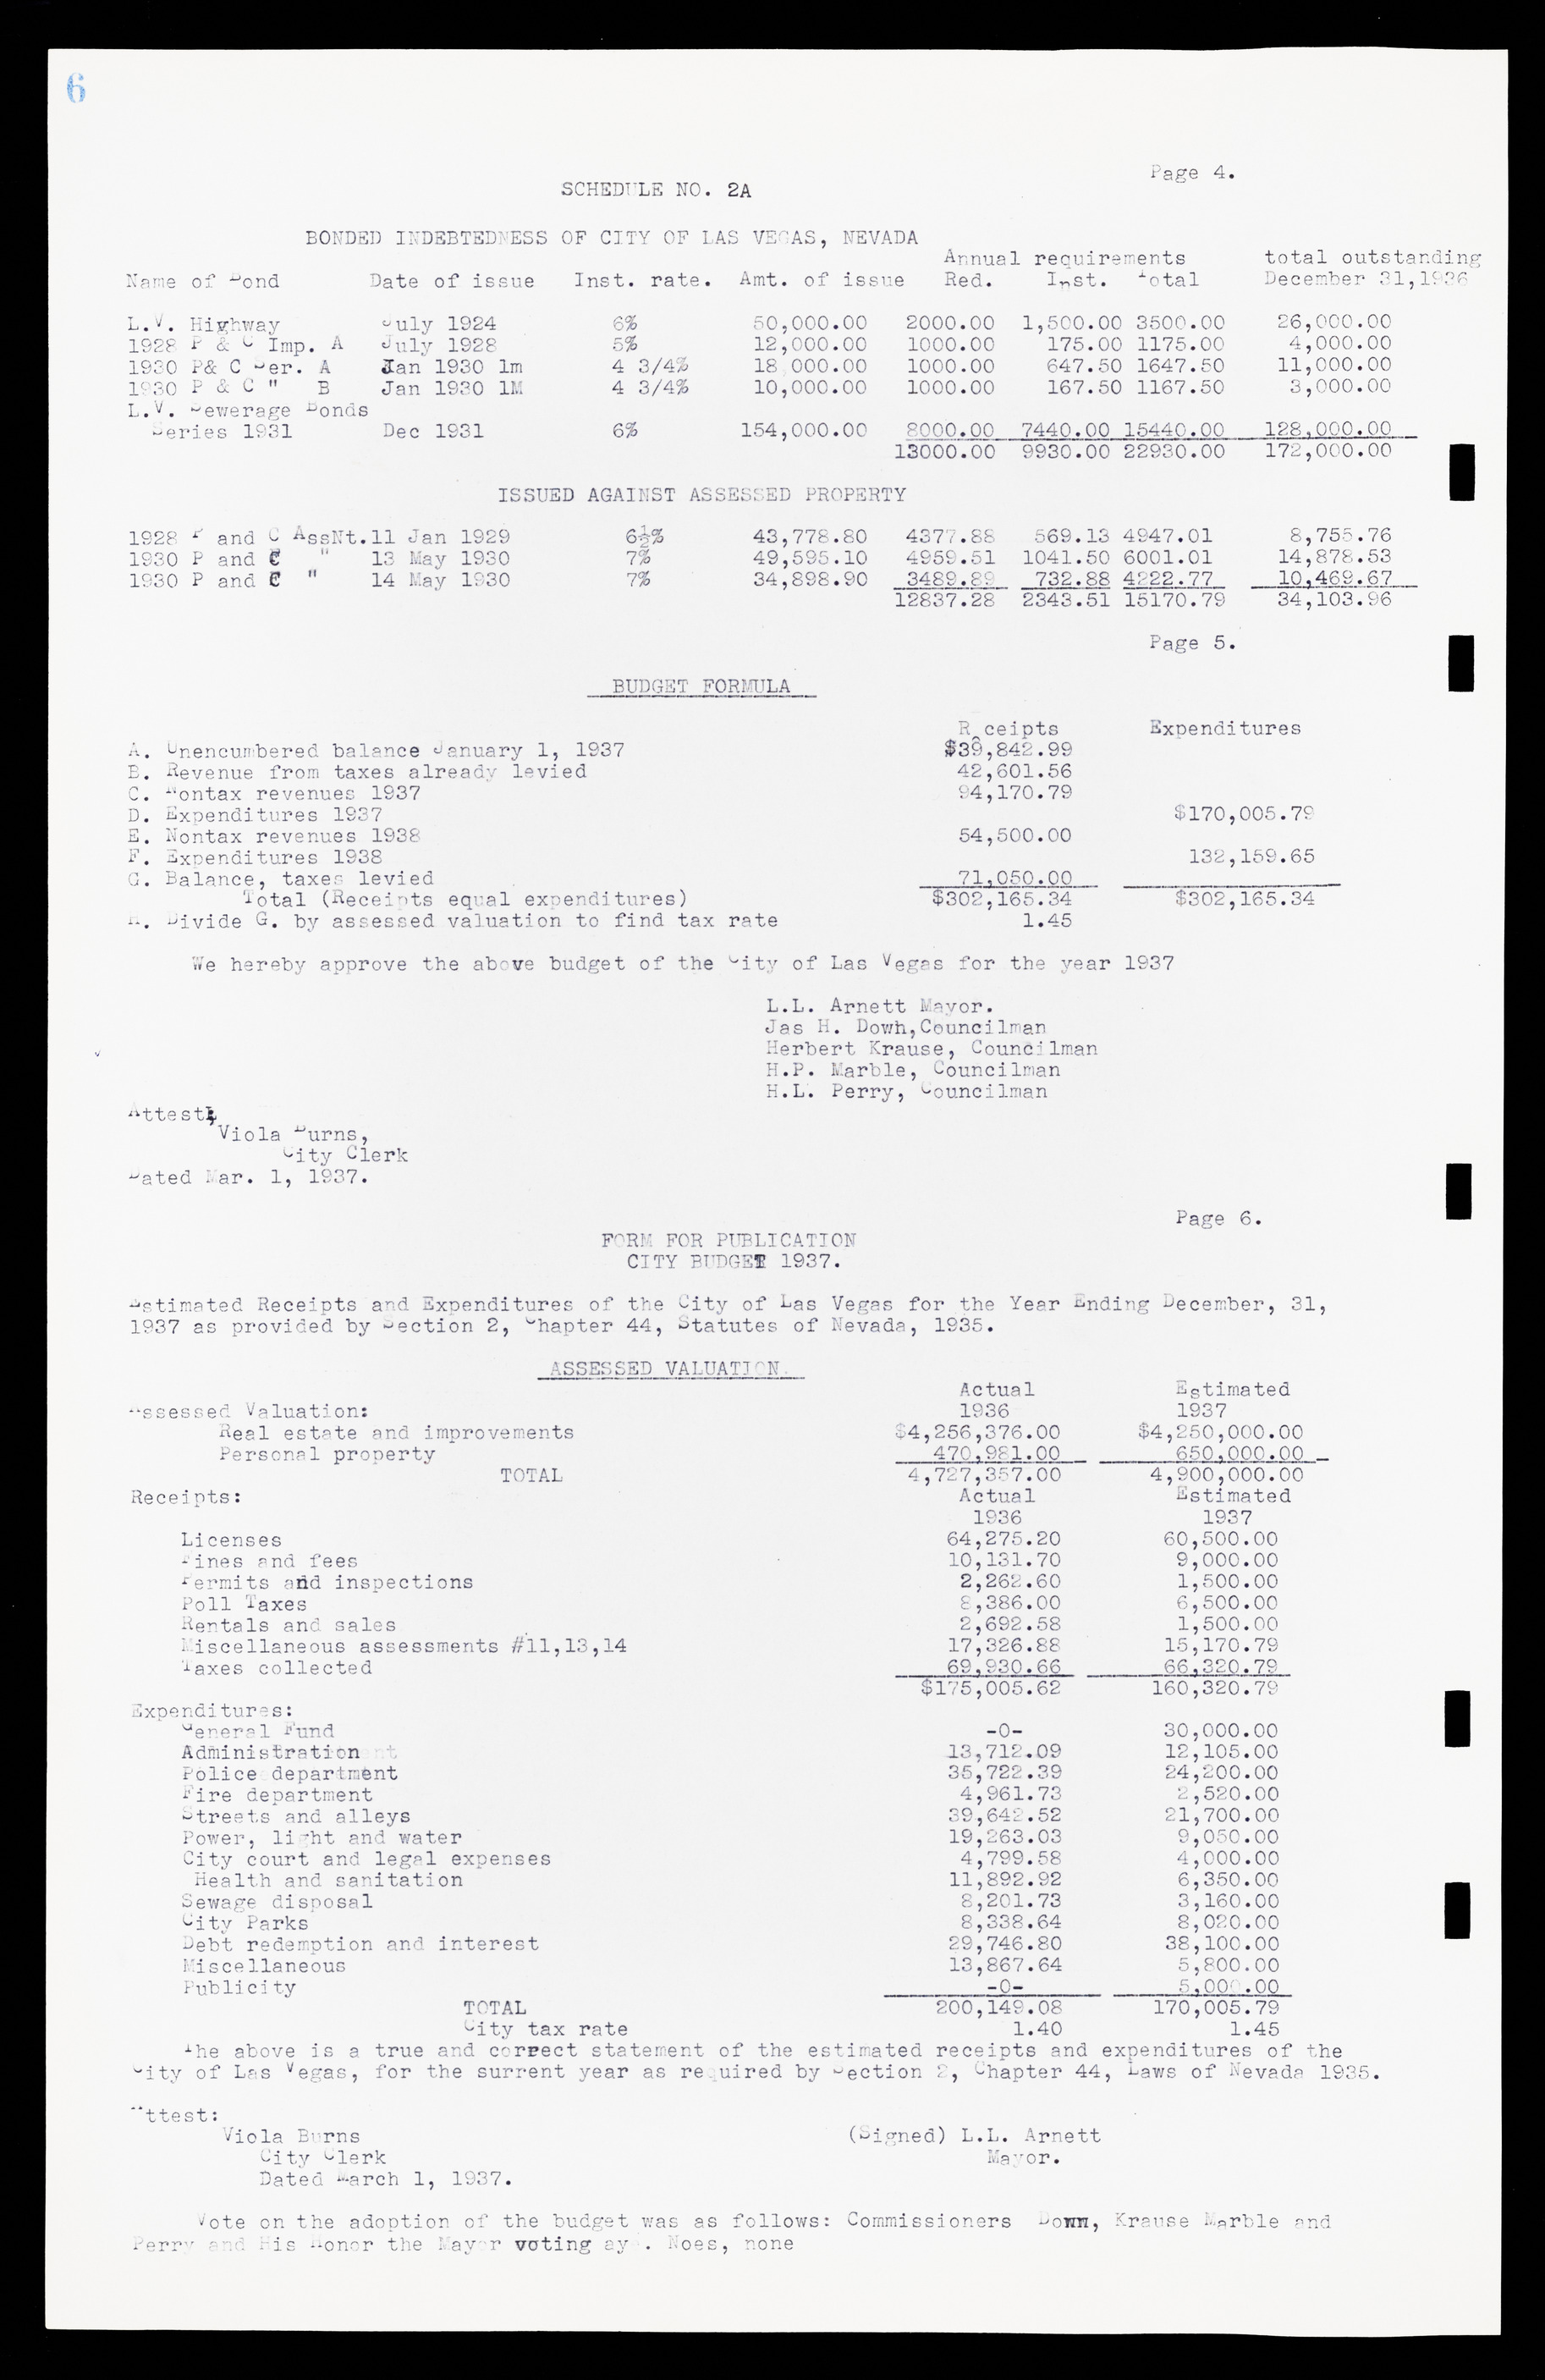 Las Vegas City Commission Minutes, February 17, 1937 to August 4, 1942, lvc000004-12